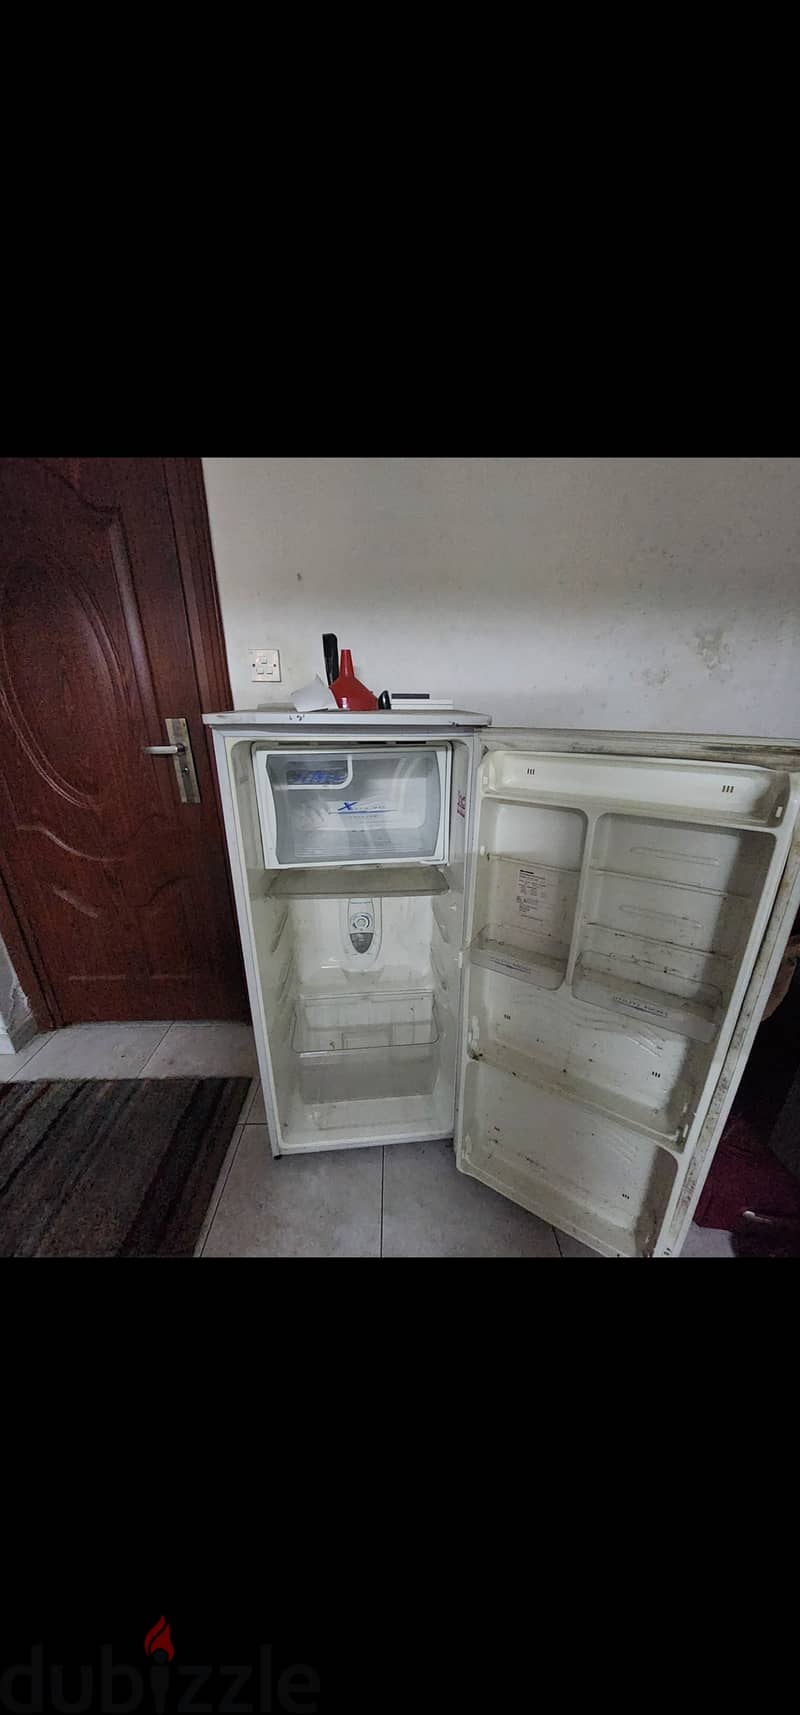 Used fridge for sale 1